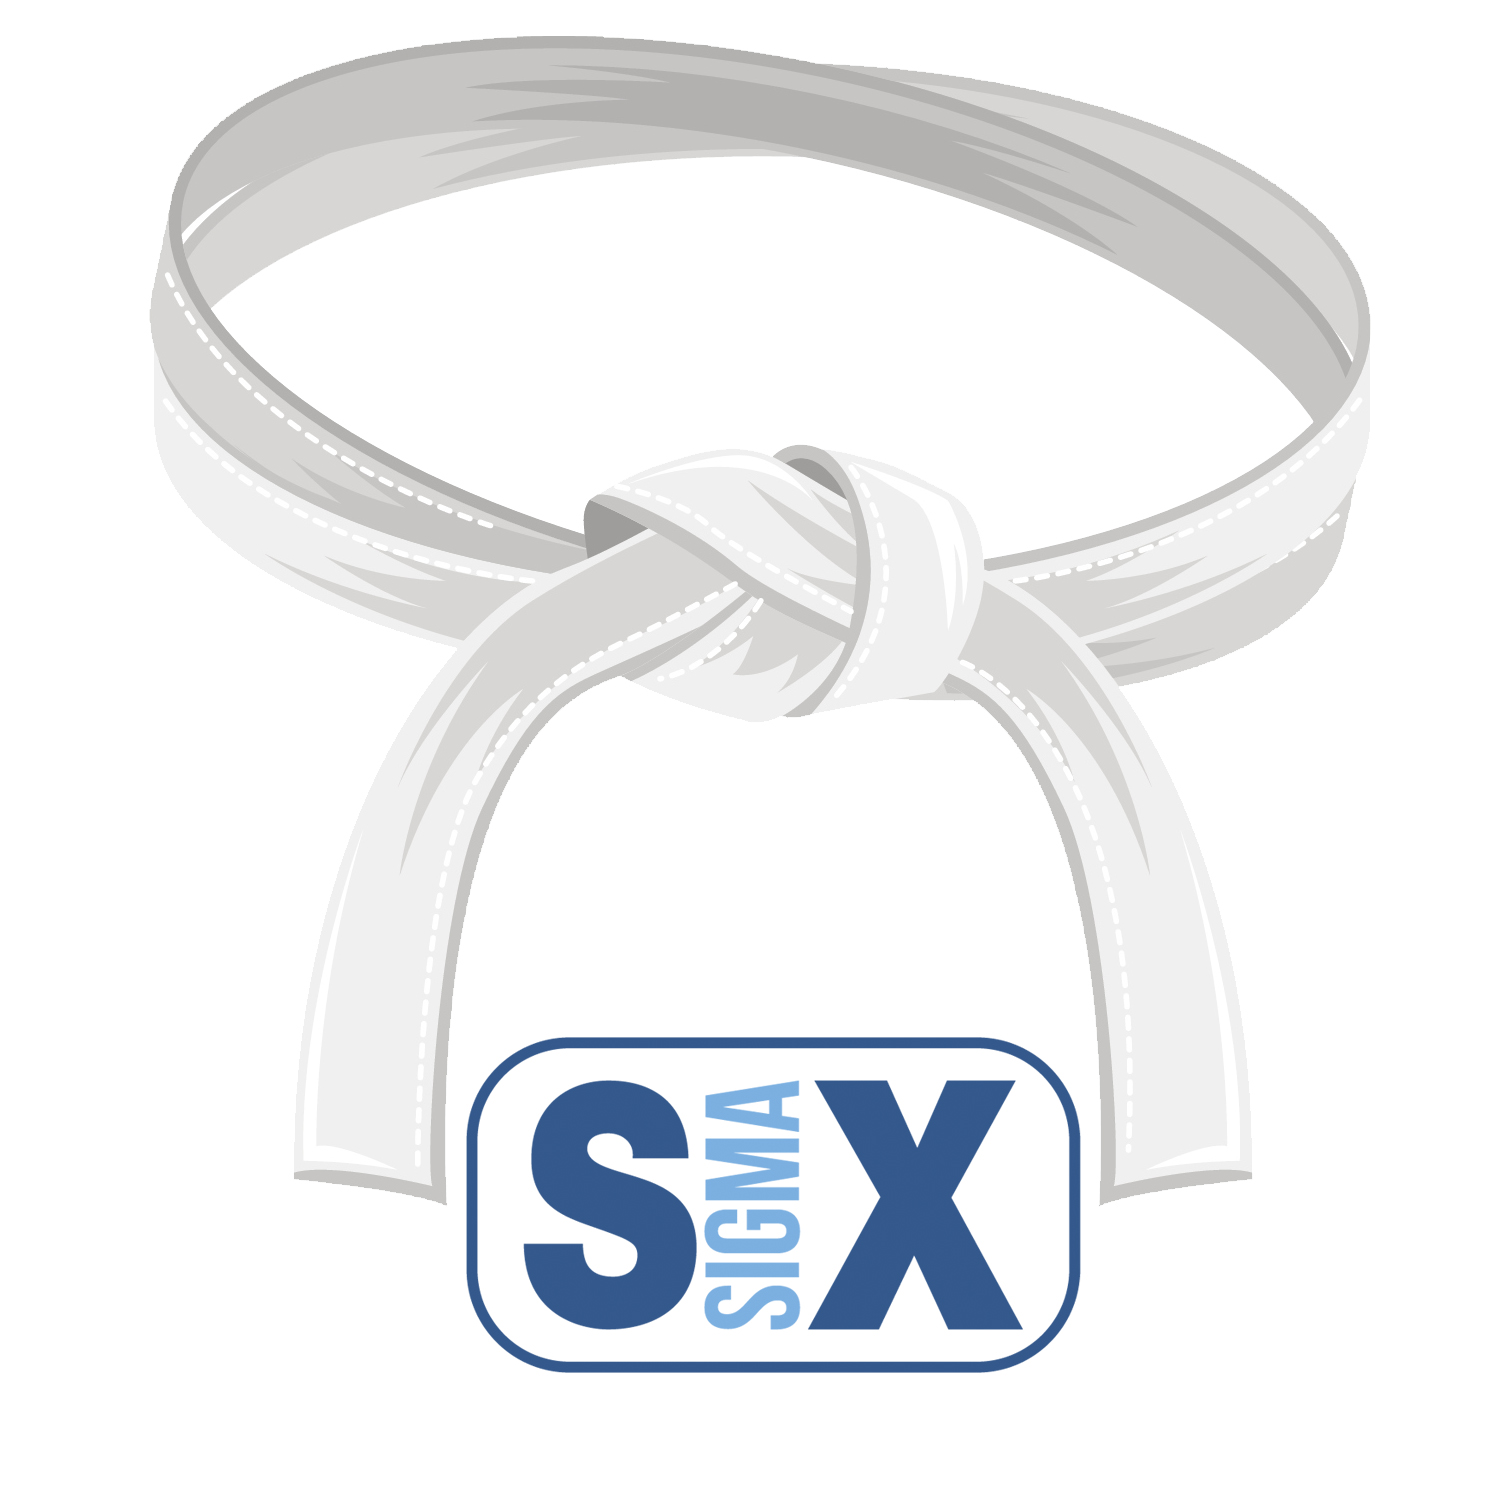 Best Of white belt in six sigma Six sigma white belt